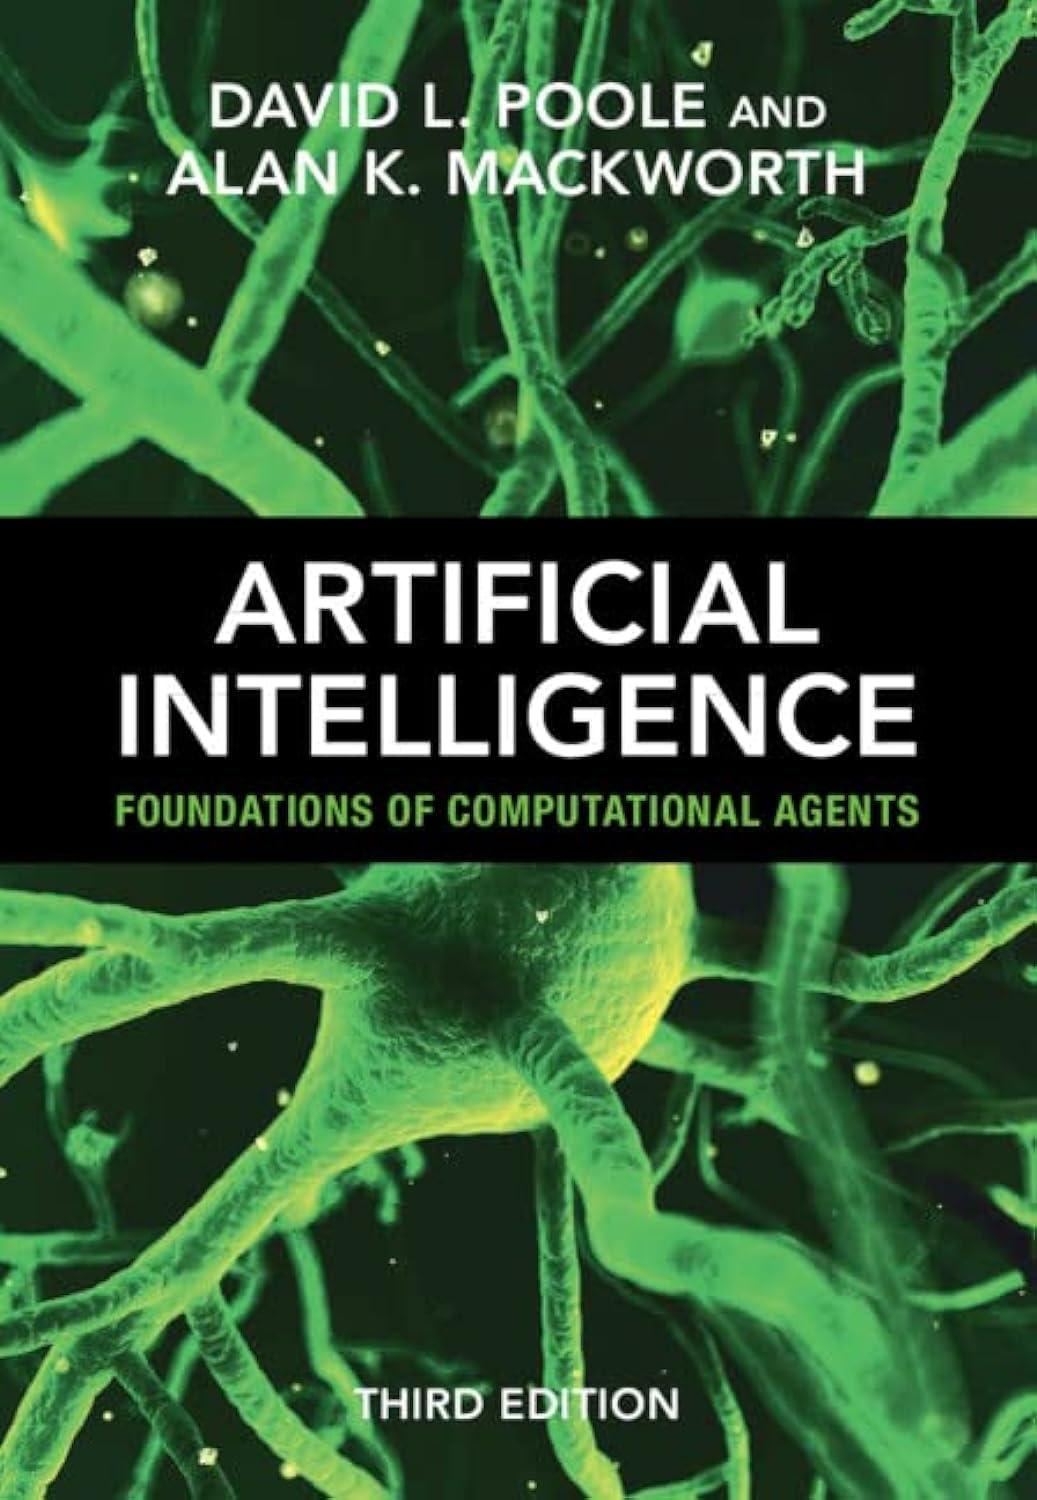 artificial intelligence: foundations of computational agents 3rd edition david l. poole , alan k. mackworth